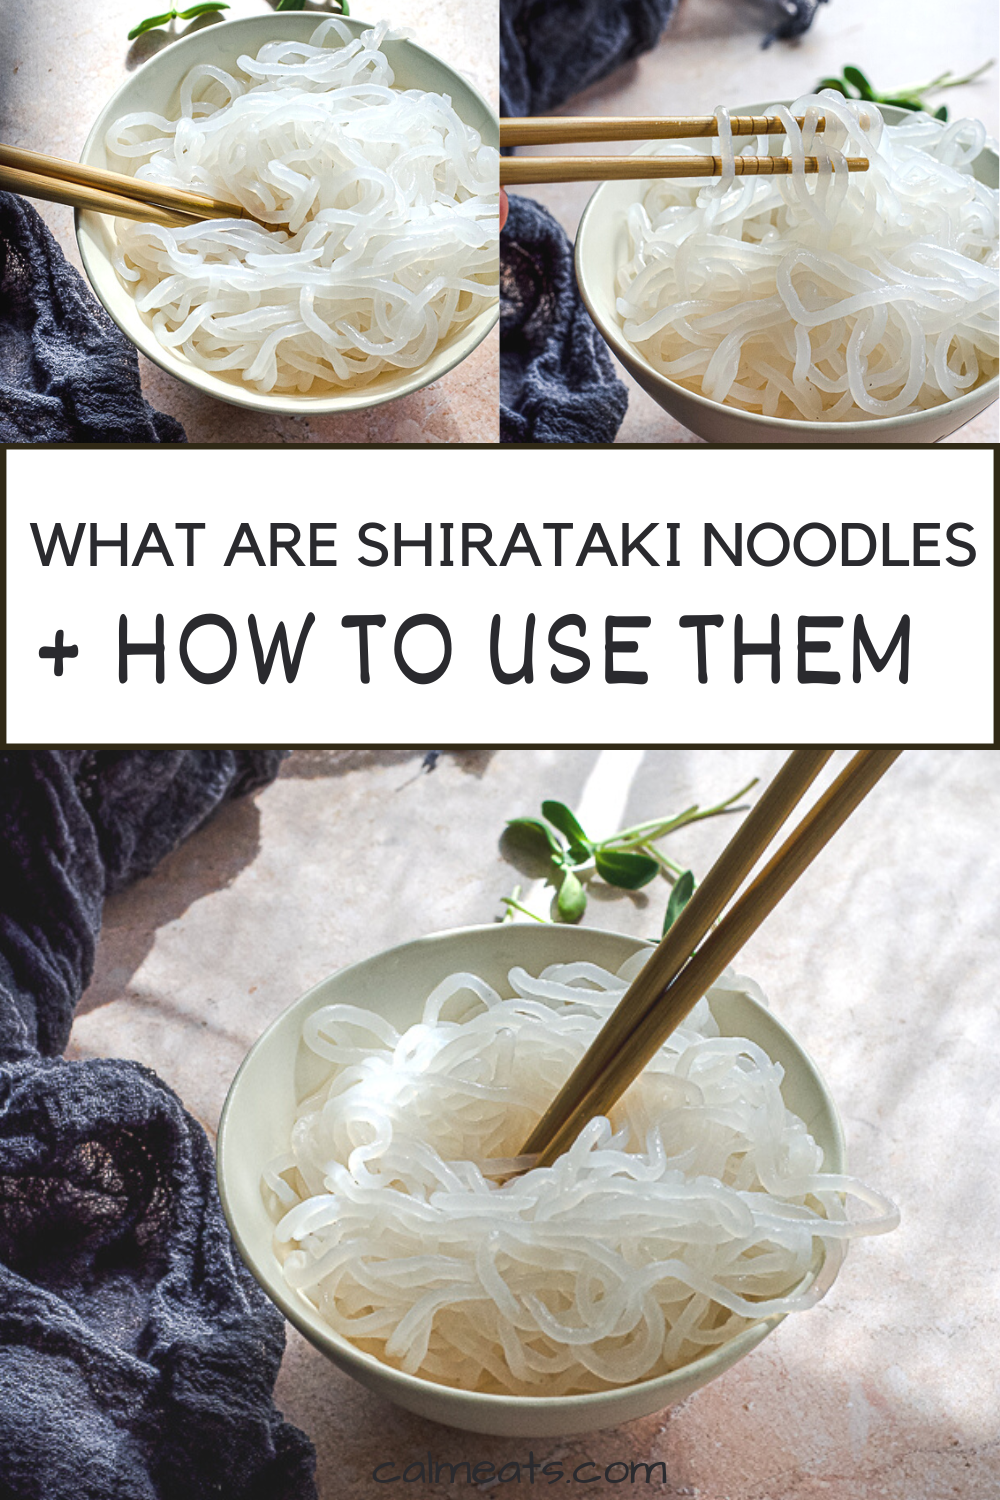 What Are Shirataki Noodles - Calm Eats